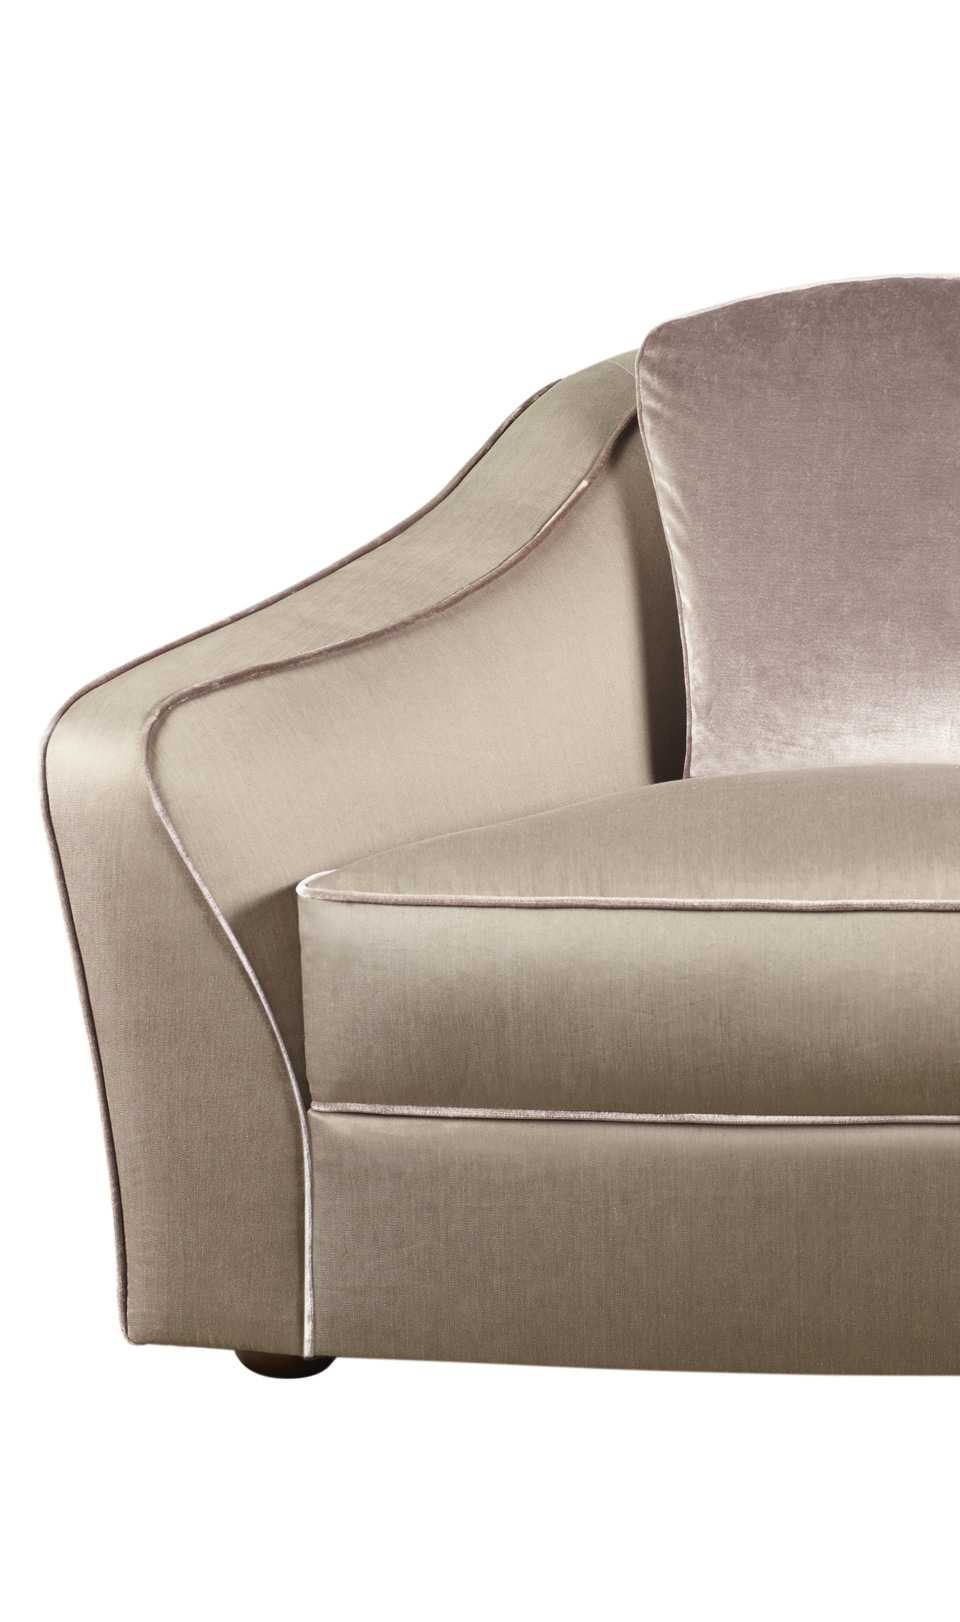 Fiore di Loto双人扶手椅以织物或皮革包衬，请参见Promemoria产品目录|Promemoria